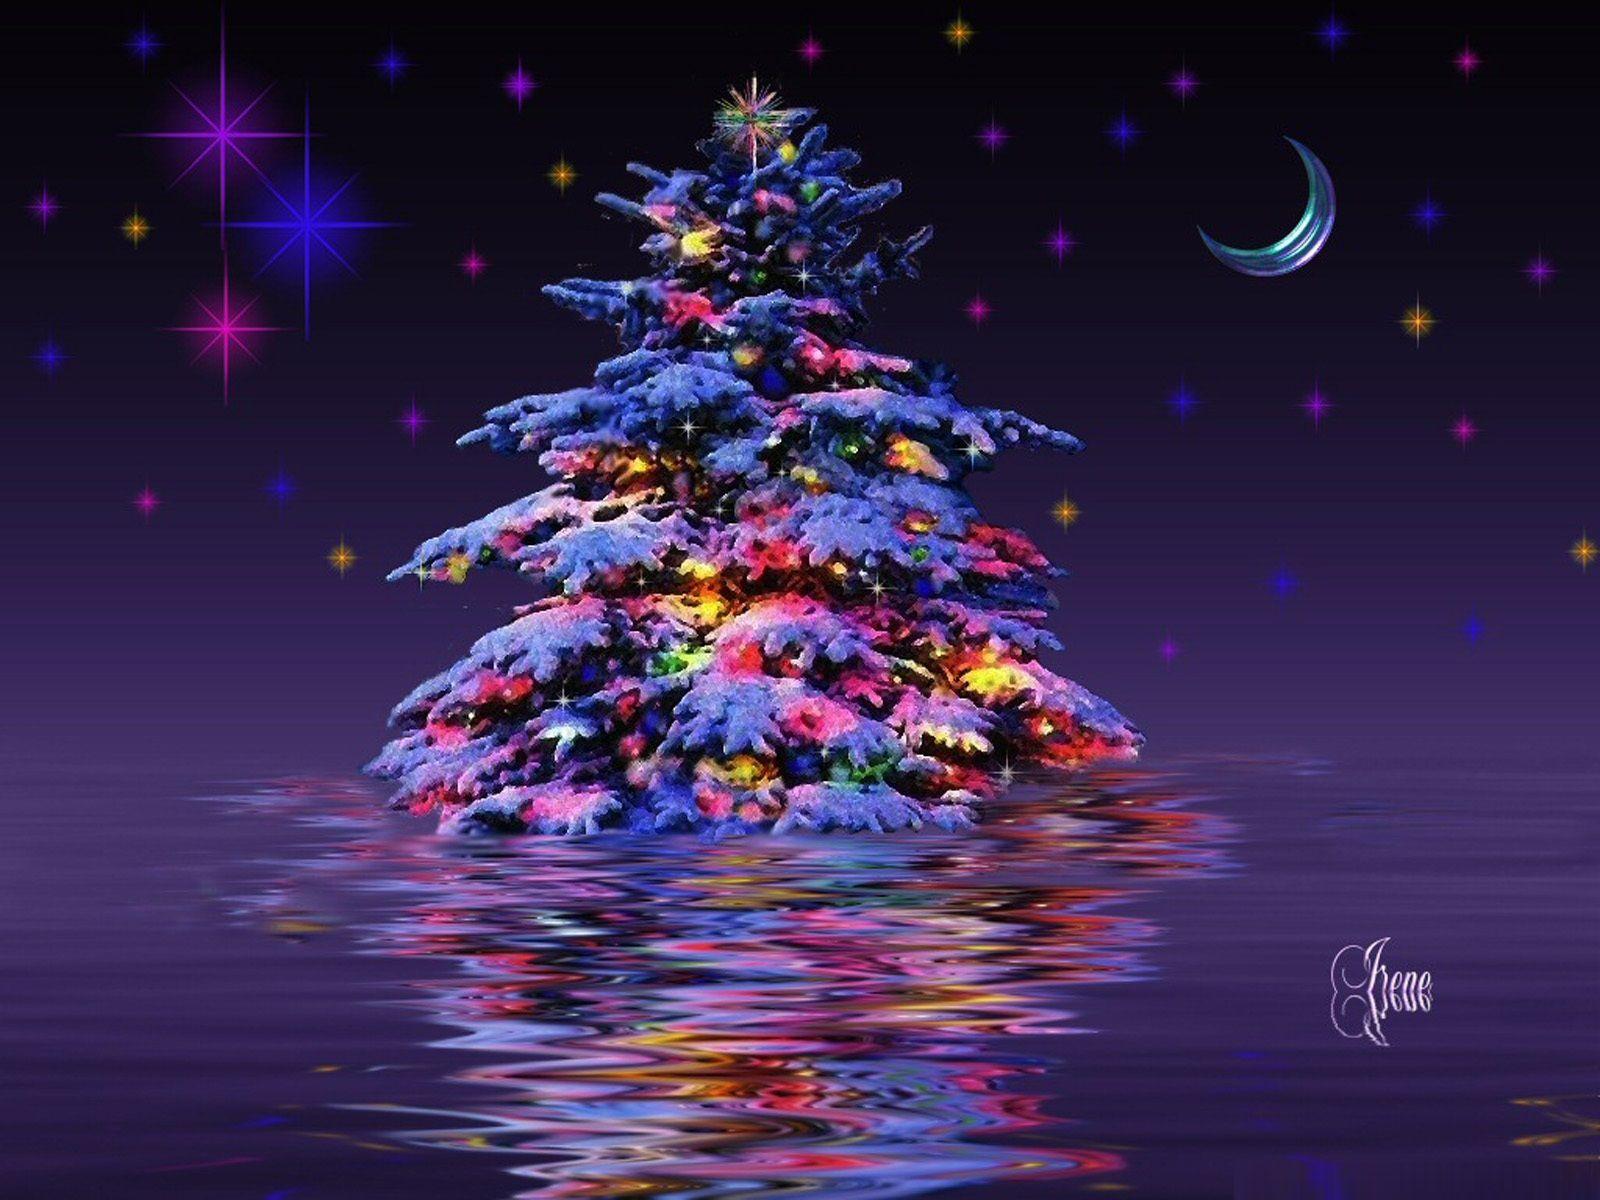 Xmas Picture HD. Christmas tree wallpaper, Christmas tree picture, Animated christmas tree